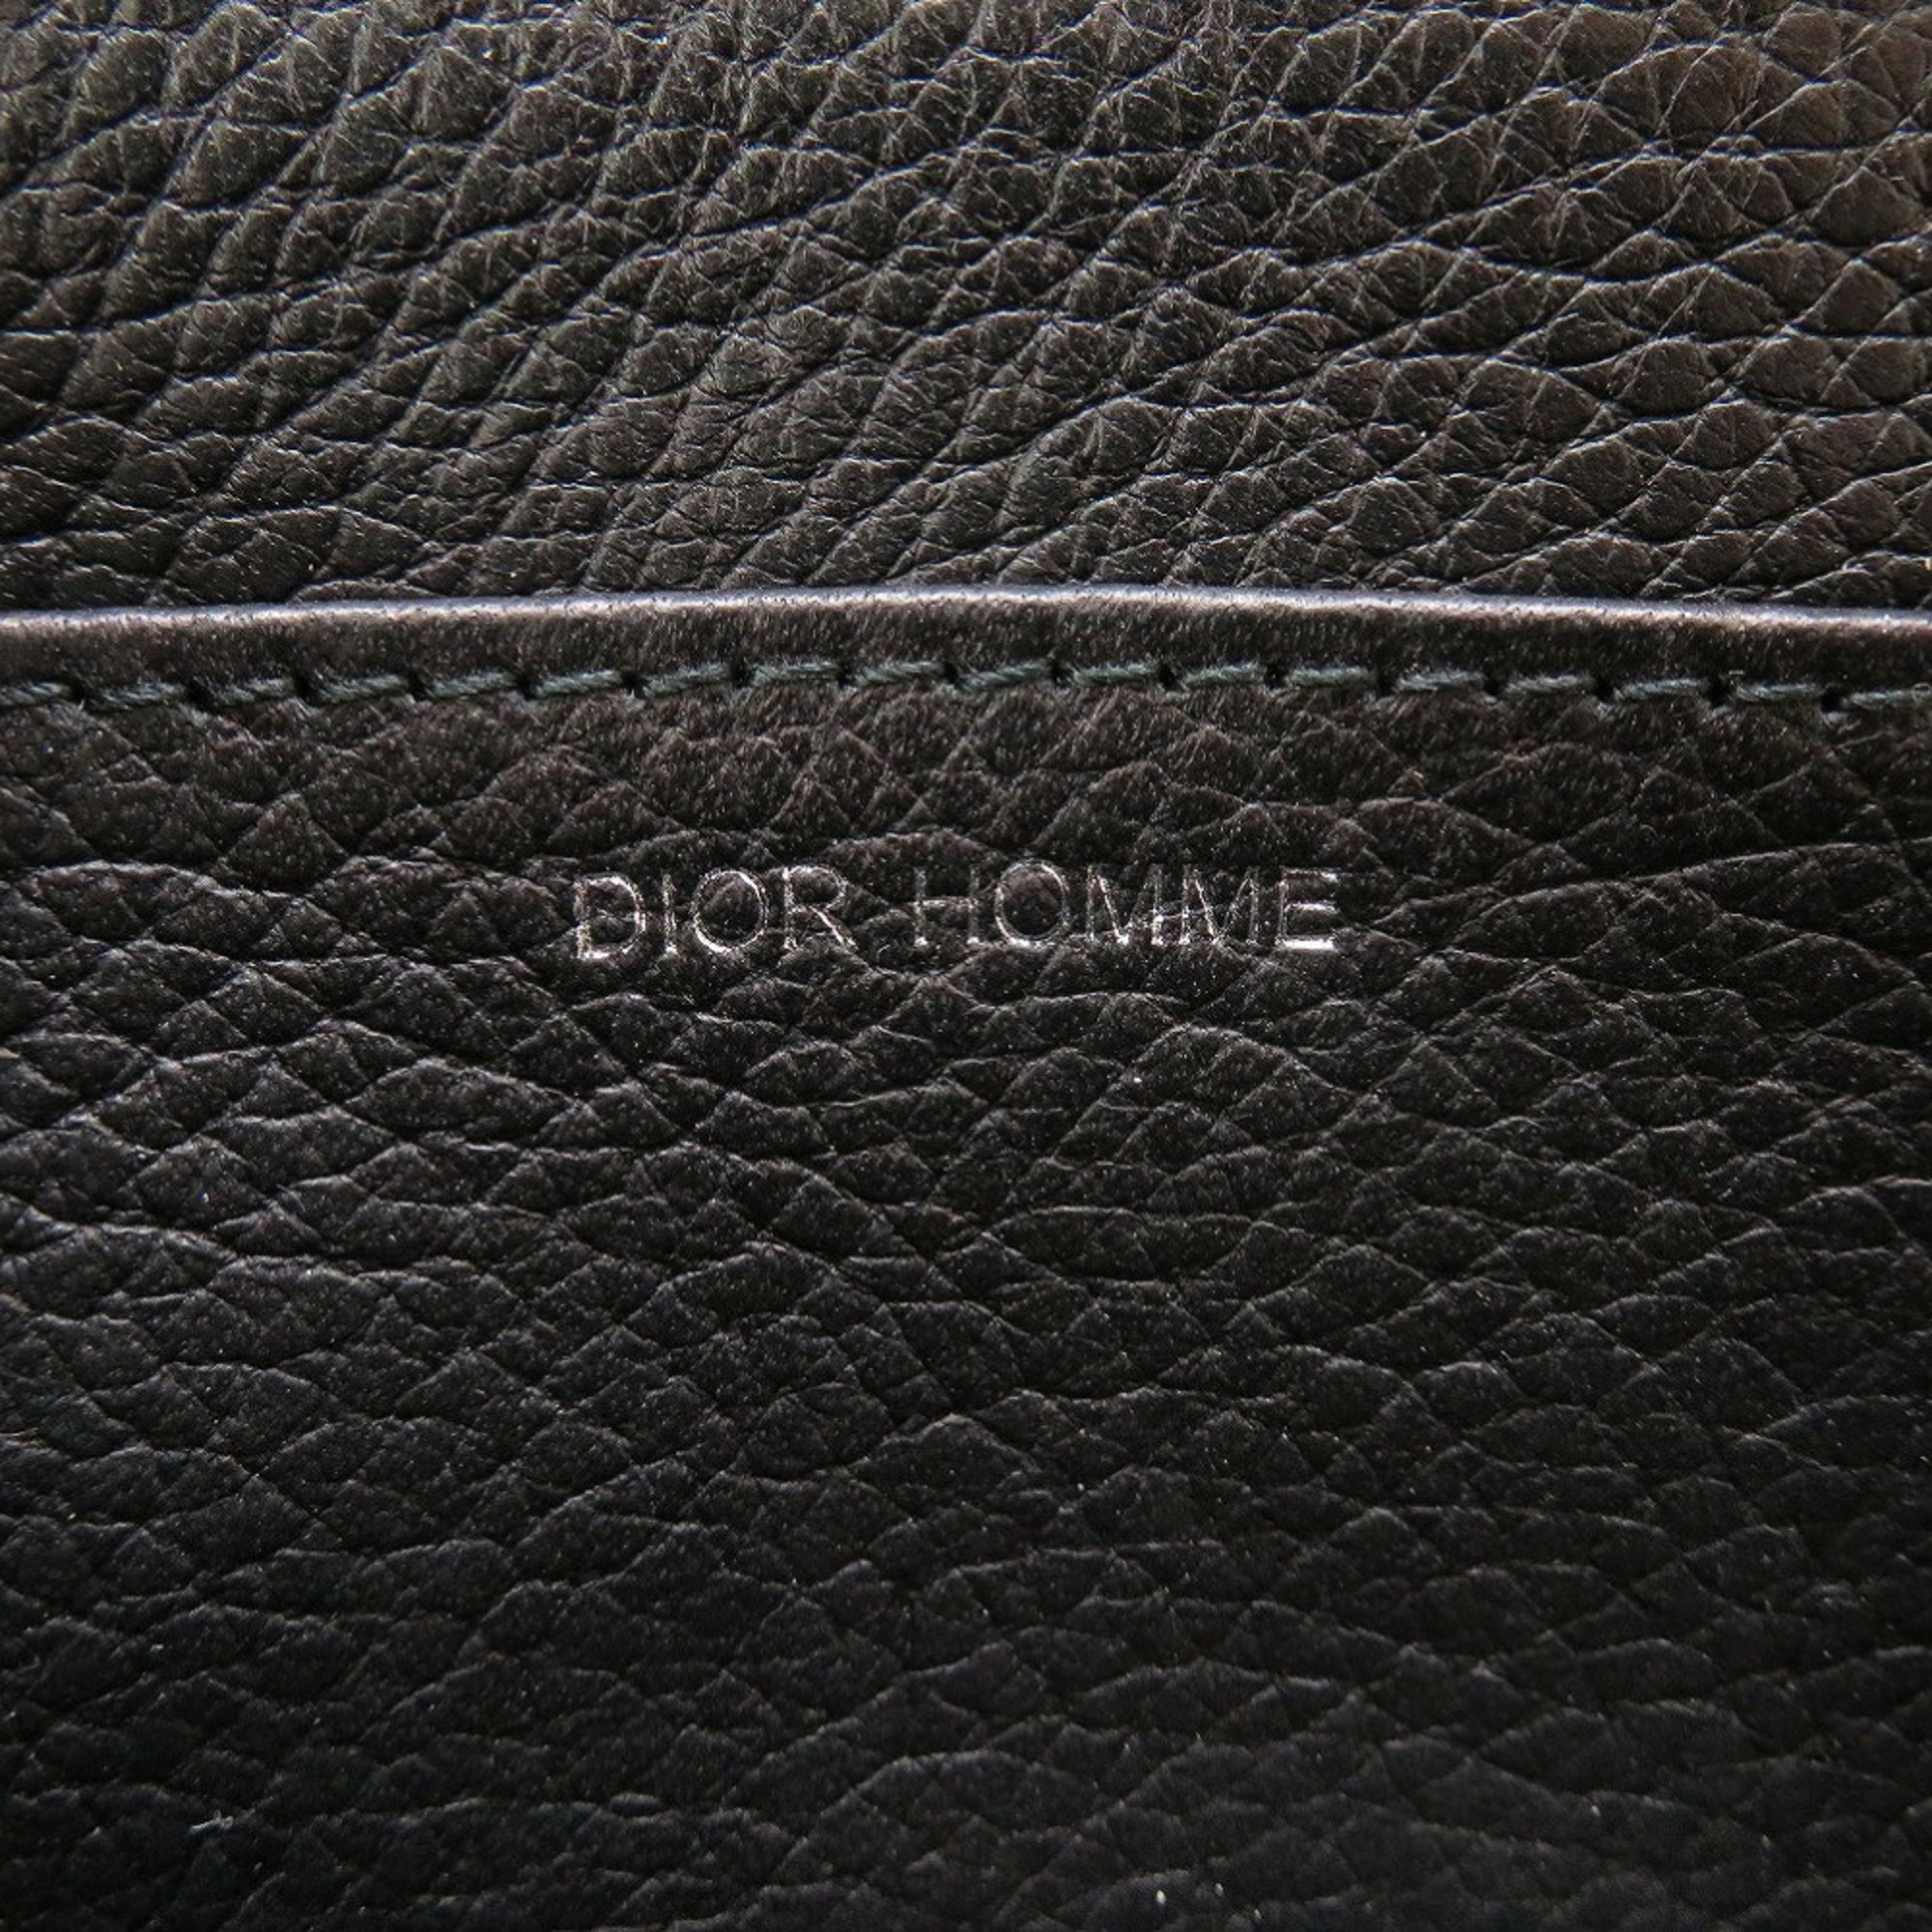 Dior Homme Leather Black Men's Round Coin Case